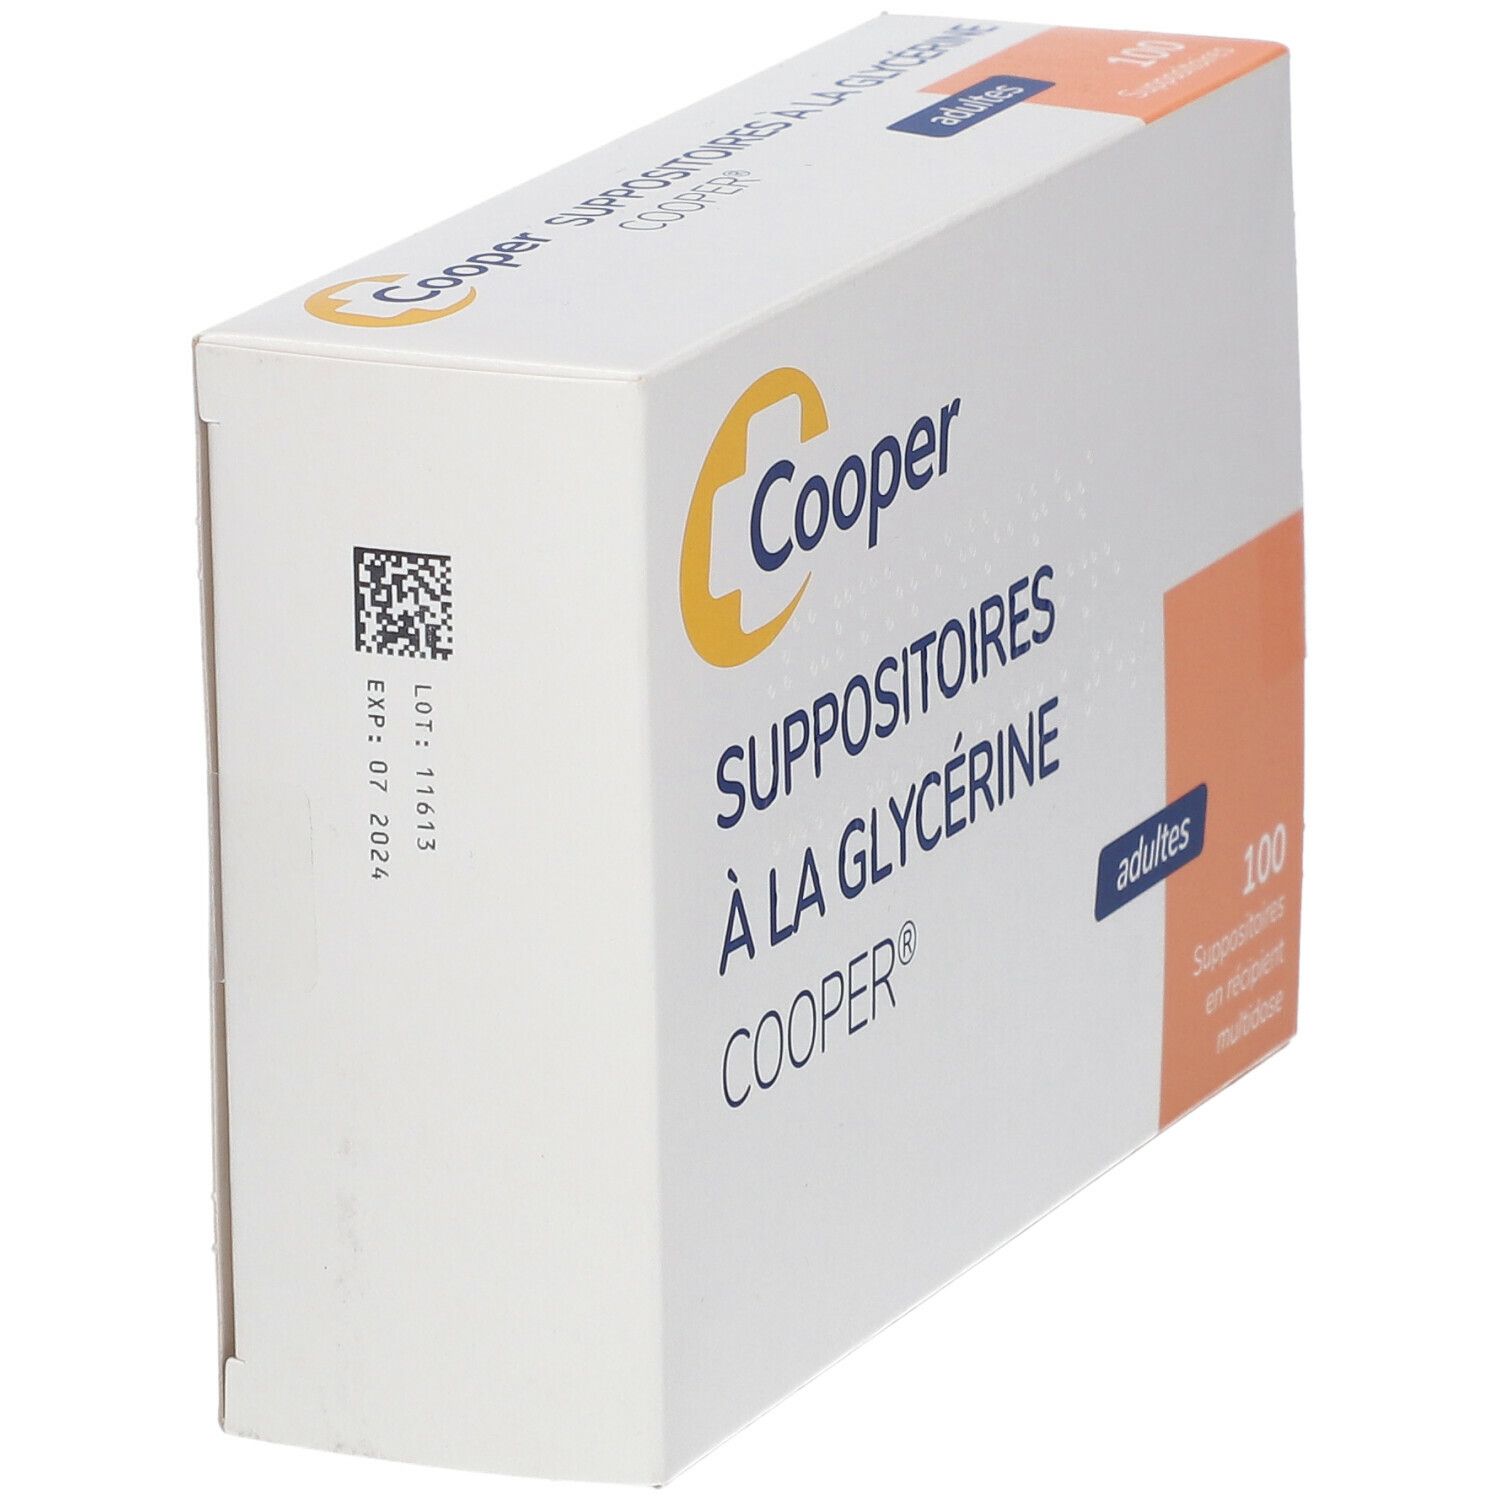 Pharmacie du Transvaal – GLYCERINE COOPER 25 SUPPOSITOIRES ADULTES